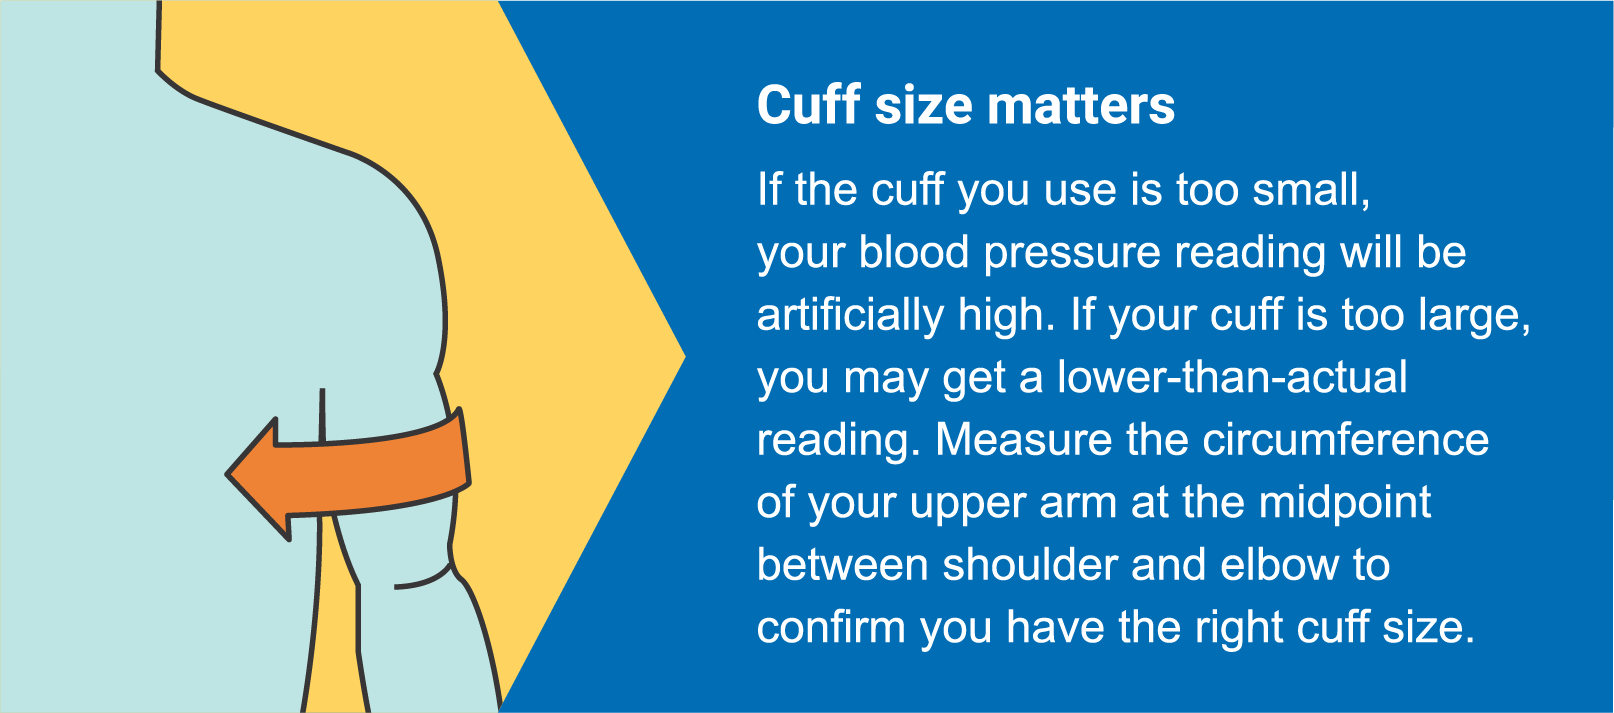 Proper Technique for Blood Pressure Measurement